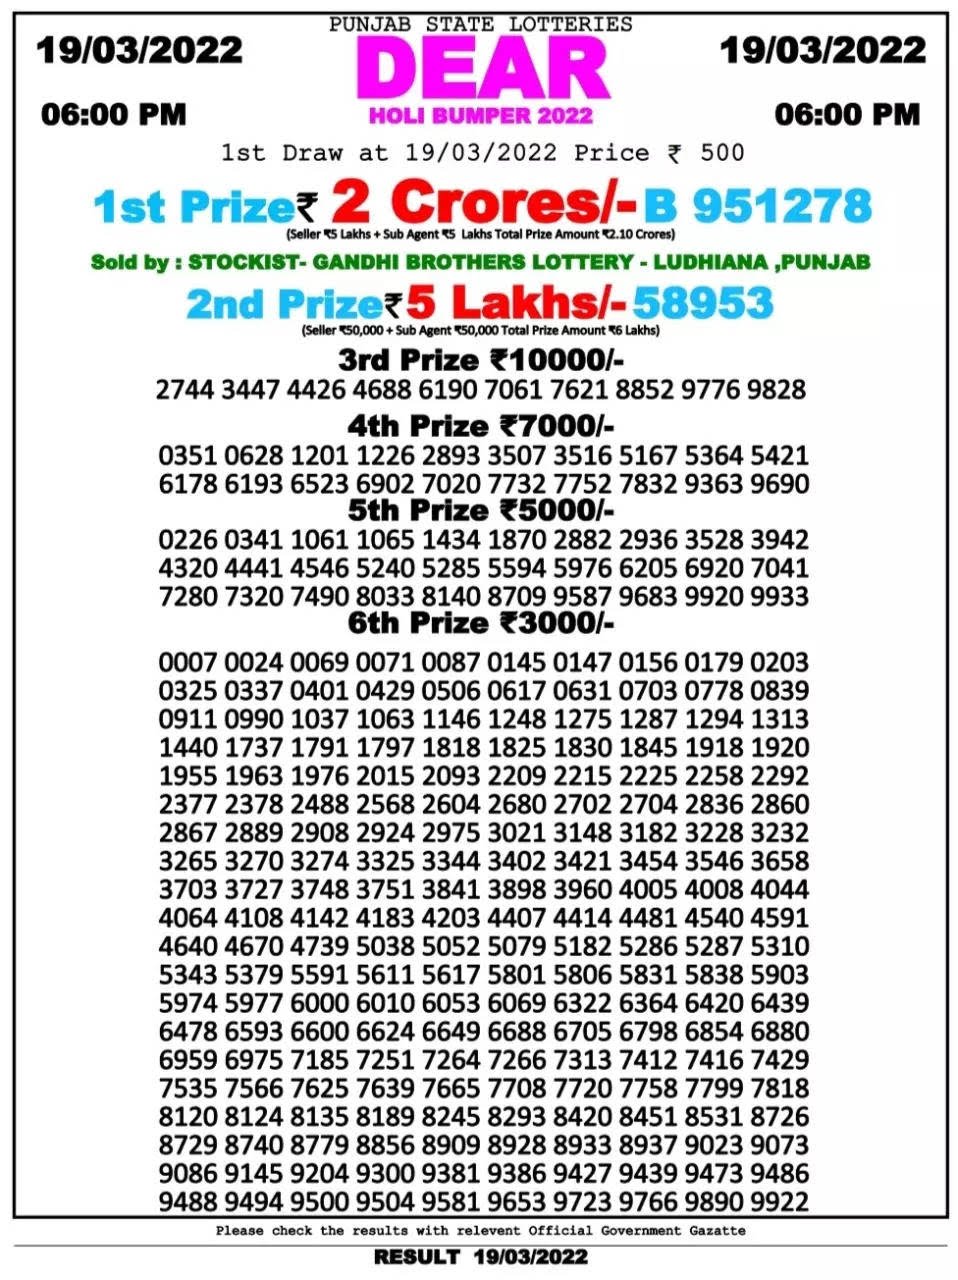 Punjab State Dear Holi Bumper 2022 Lottery Results